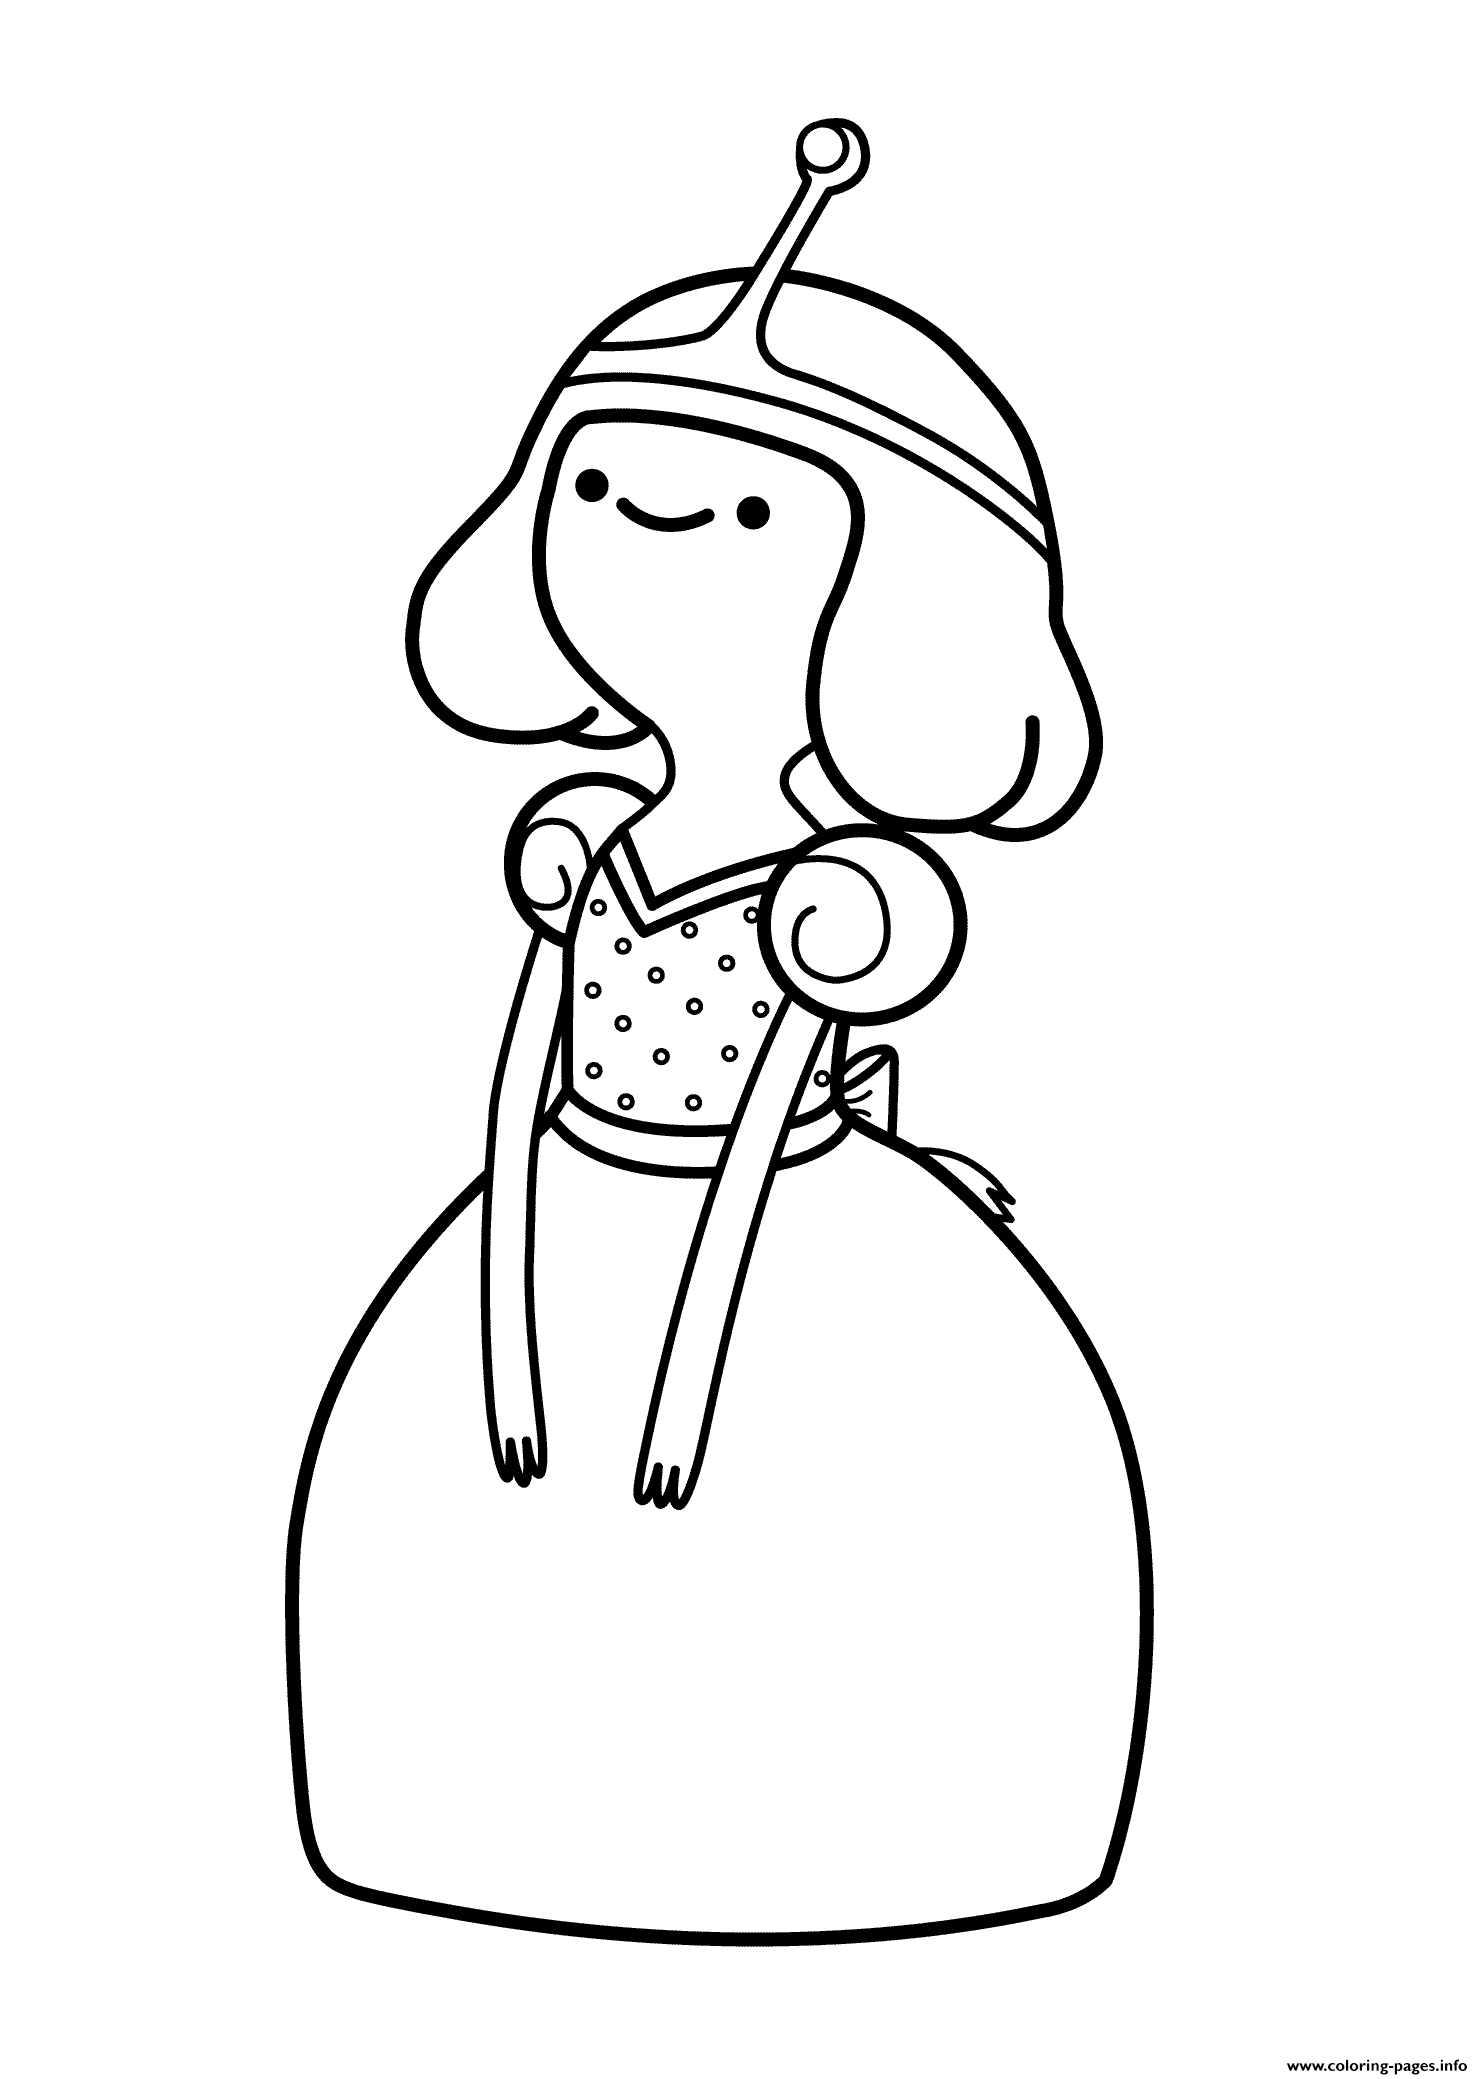 Princess Bubblegum Young Lady coloring